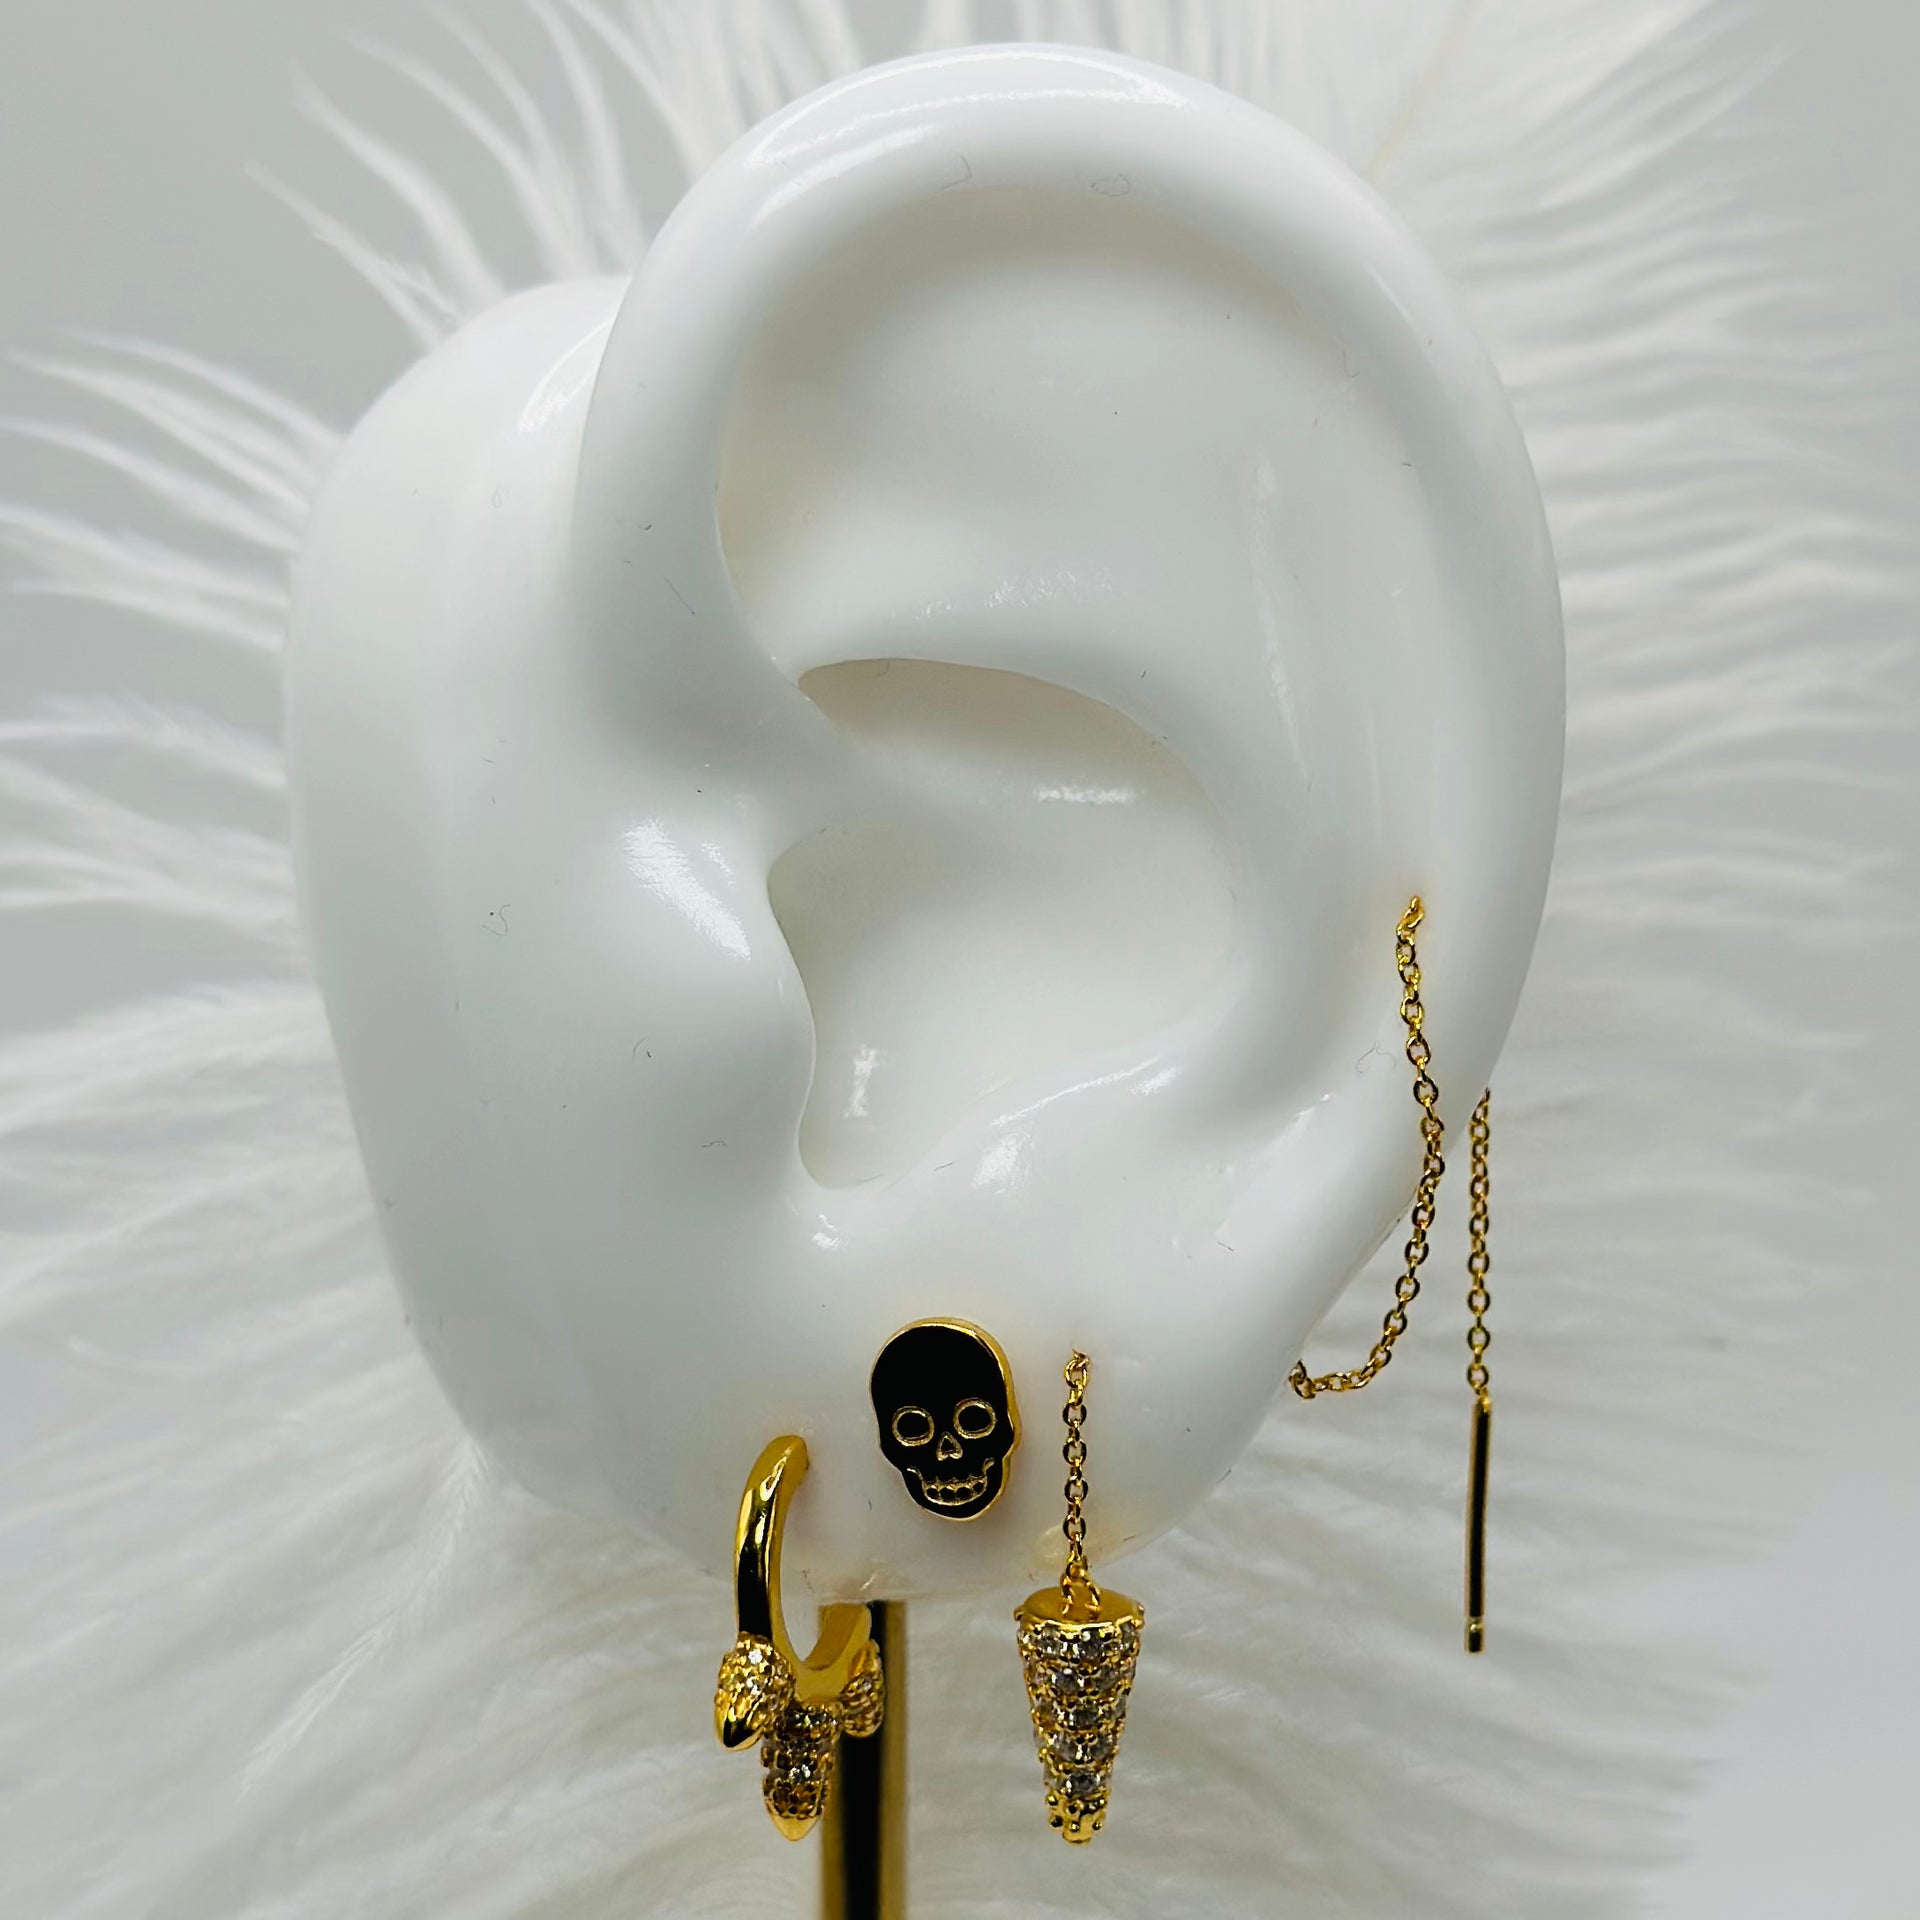 Skull Earrings – Cute Gothic Jewelry Set – Beluga Design